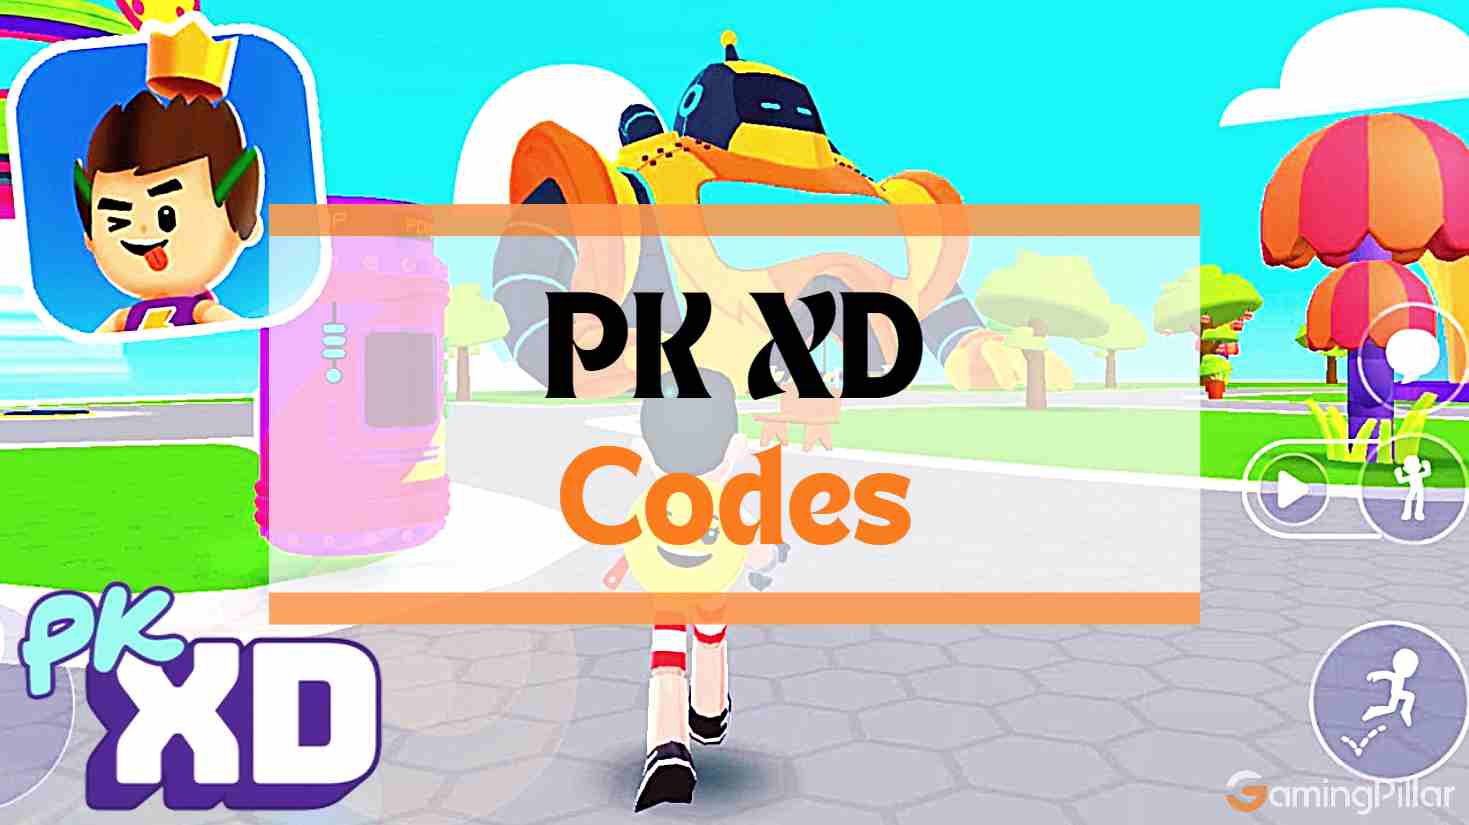 PK XD Redeem Codes